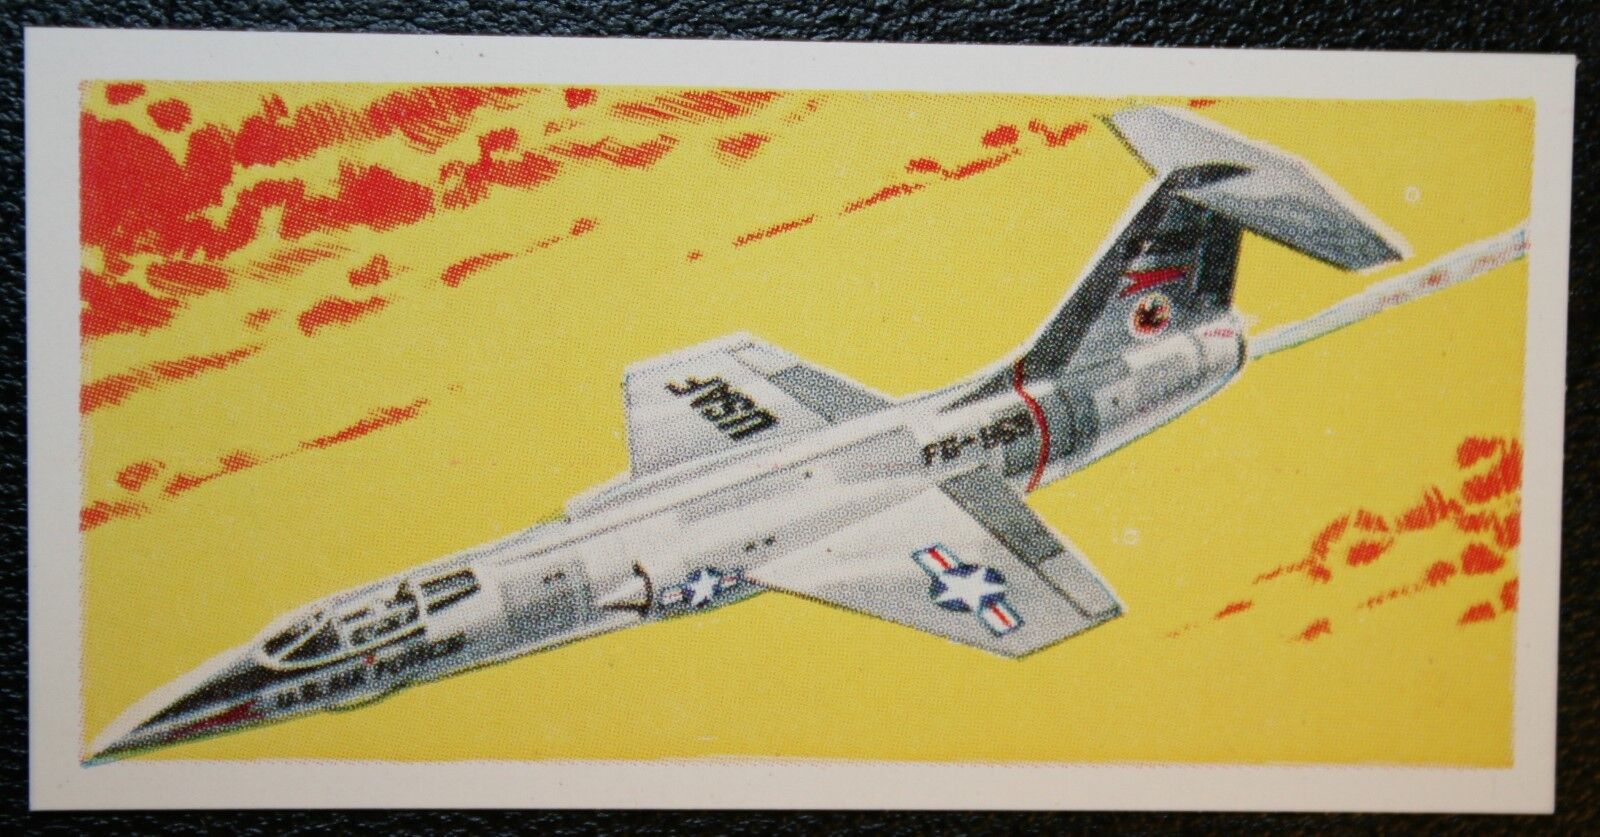 LOCKHEED F-104A STARFIGHTER  Jet Fighter   Original 1960's Vintage Card  HB17M